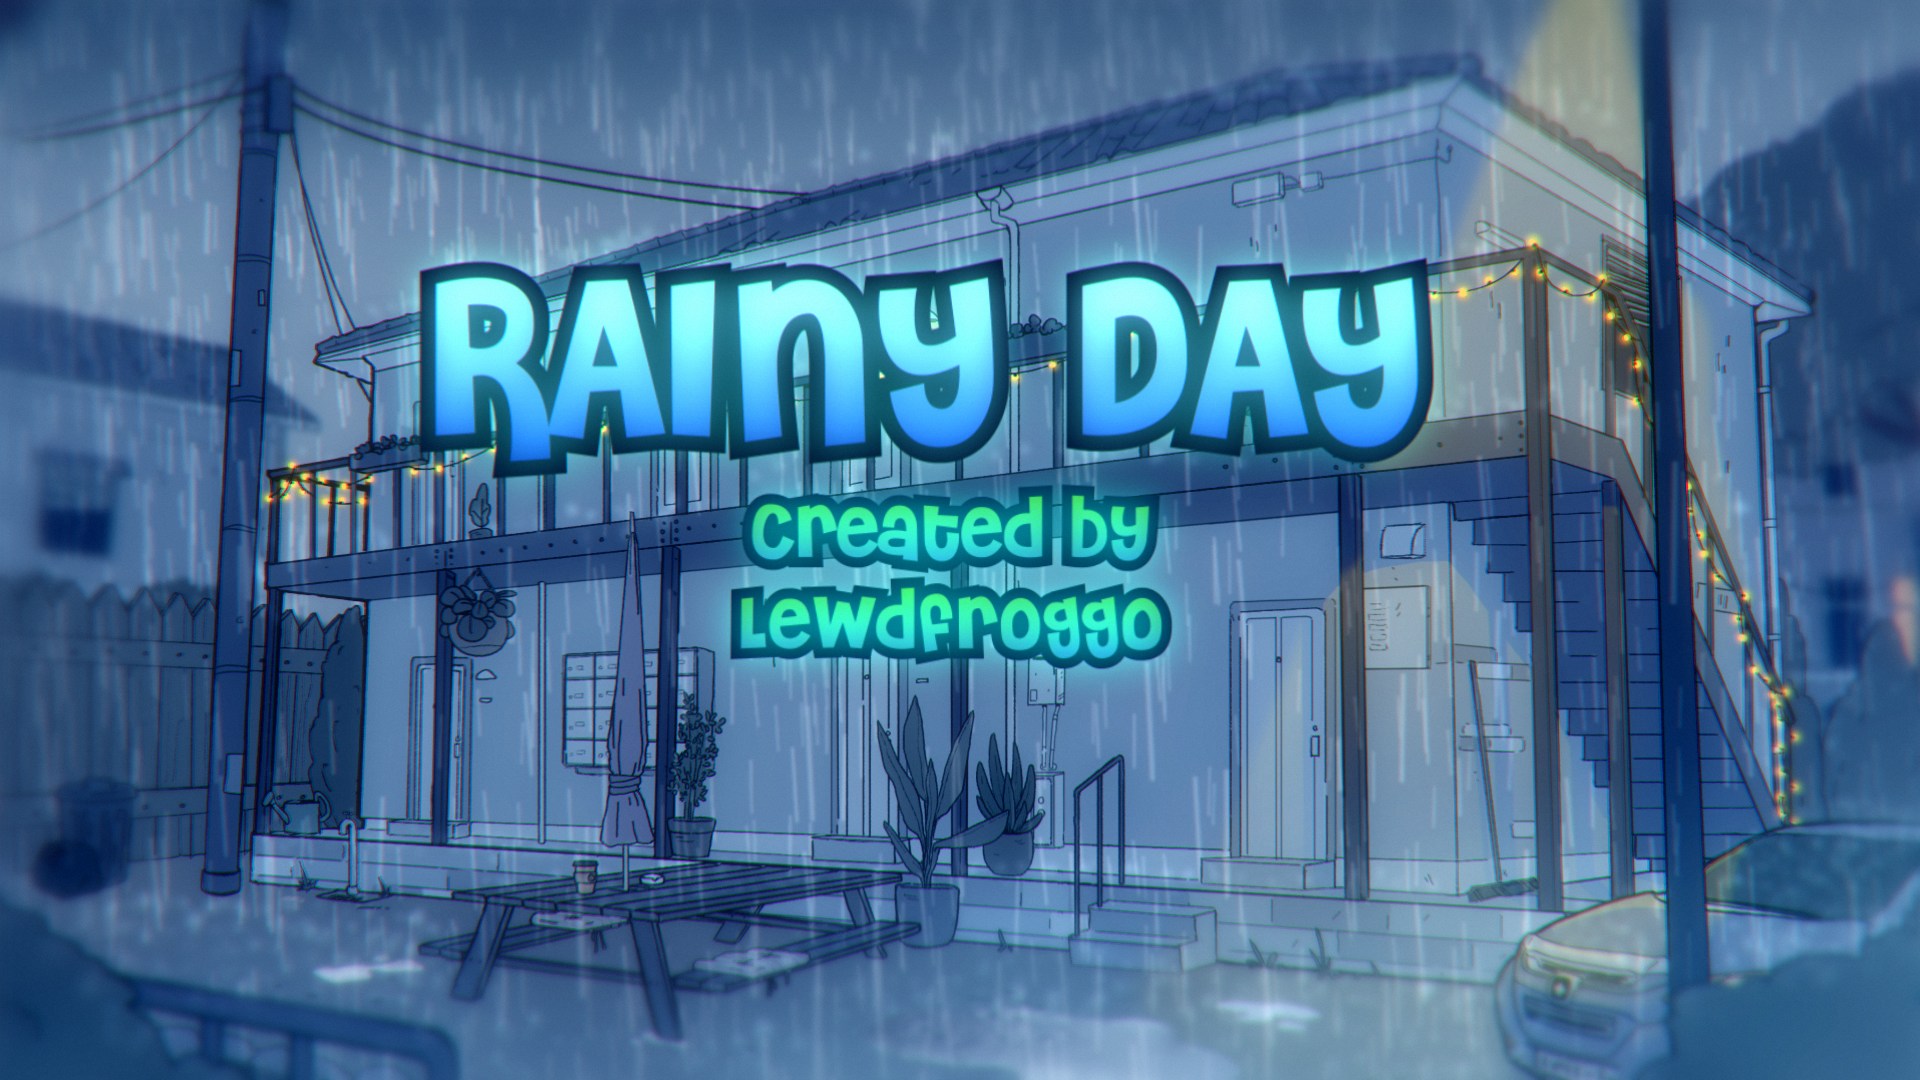 [Video] Lewdfroggo - Rainy Day